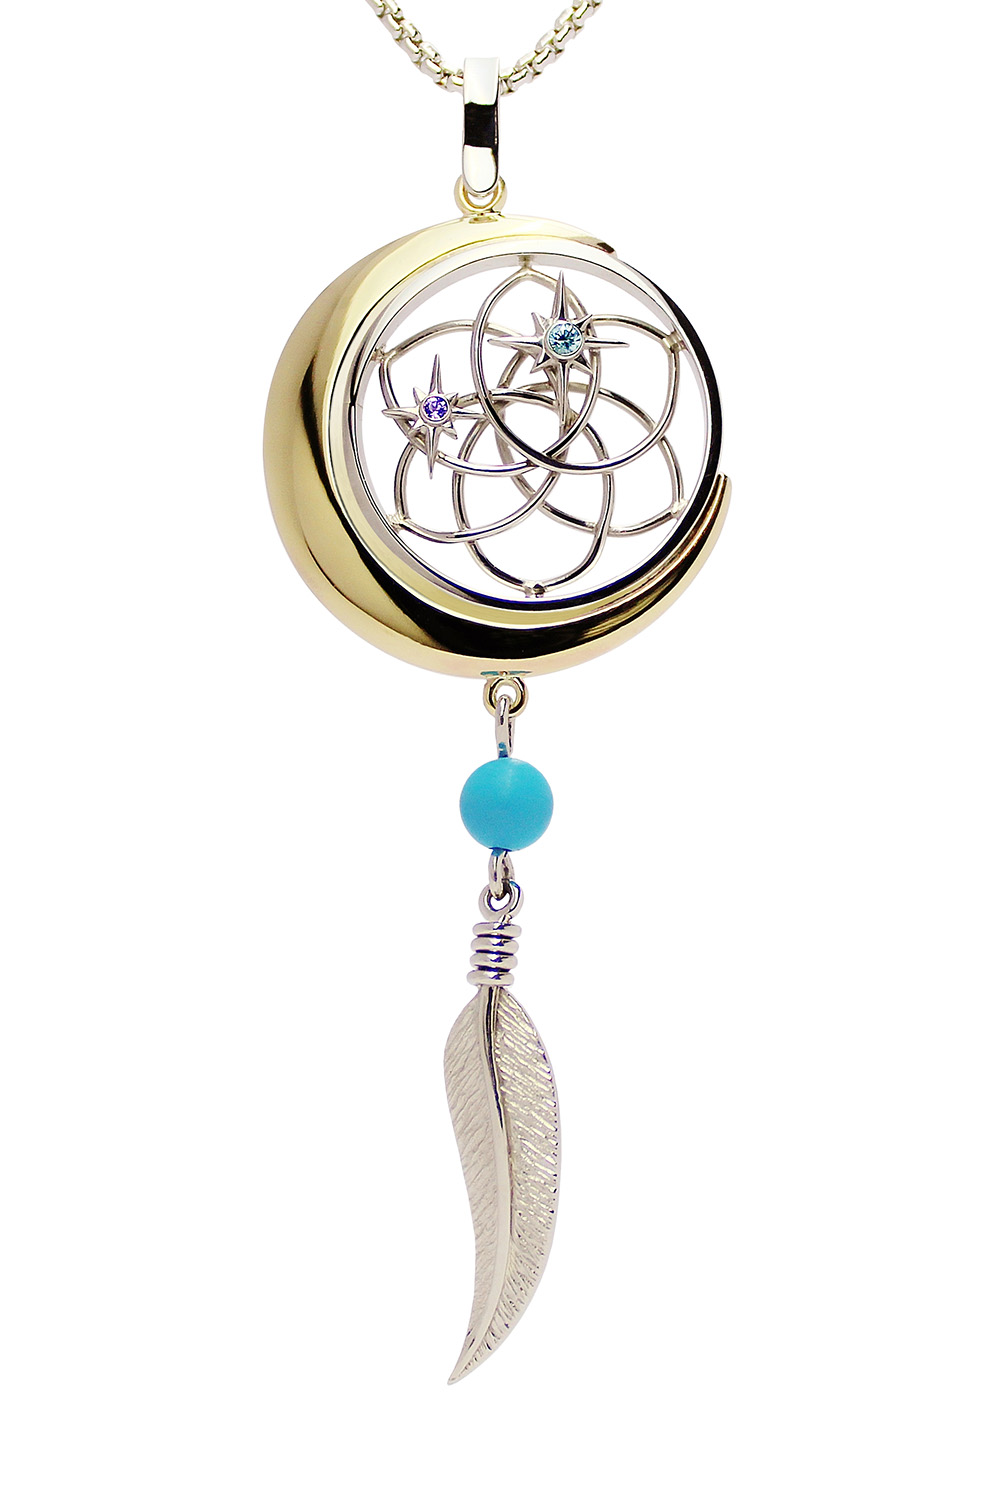 palladium & 9ct. yellow gold dream catcher pendant set with a small tanzanite, blue zircon and turquoise bead